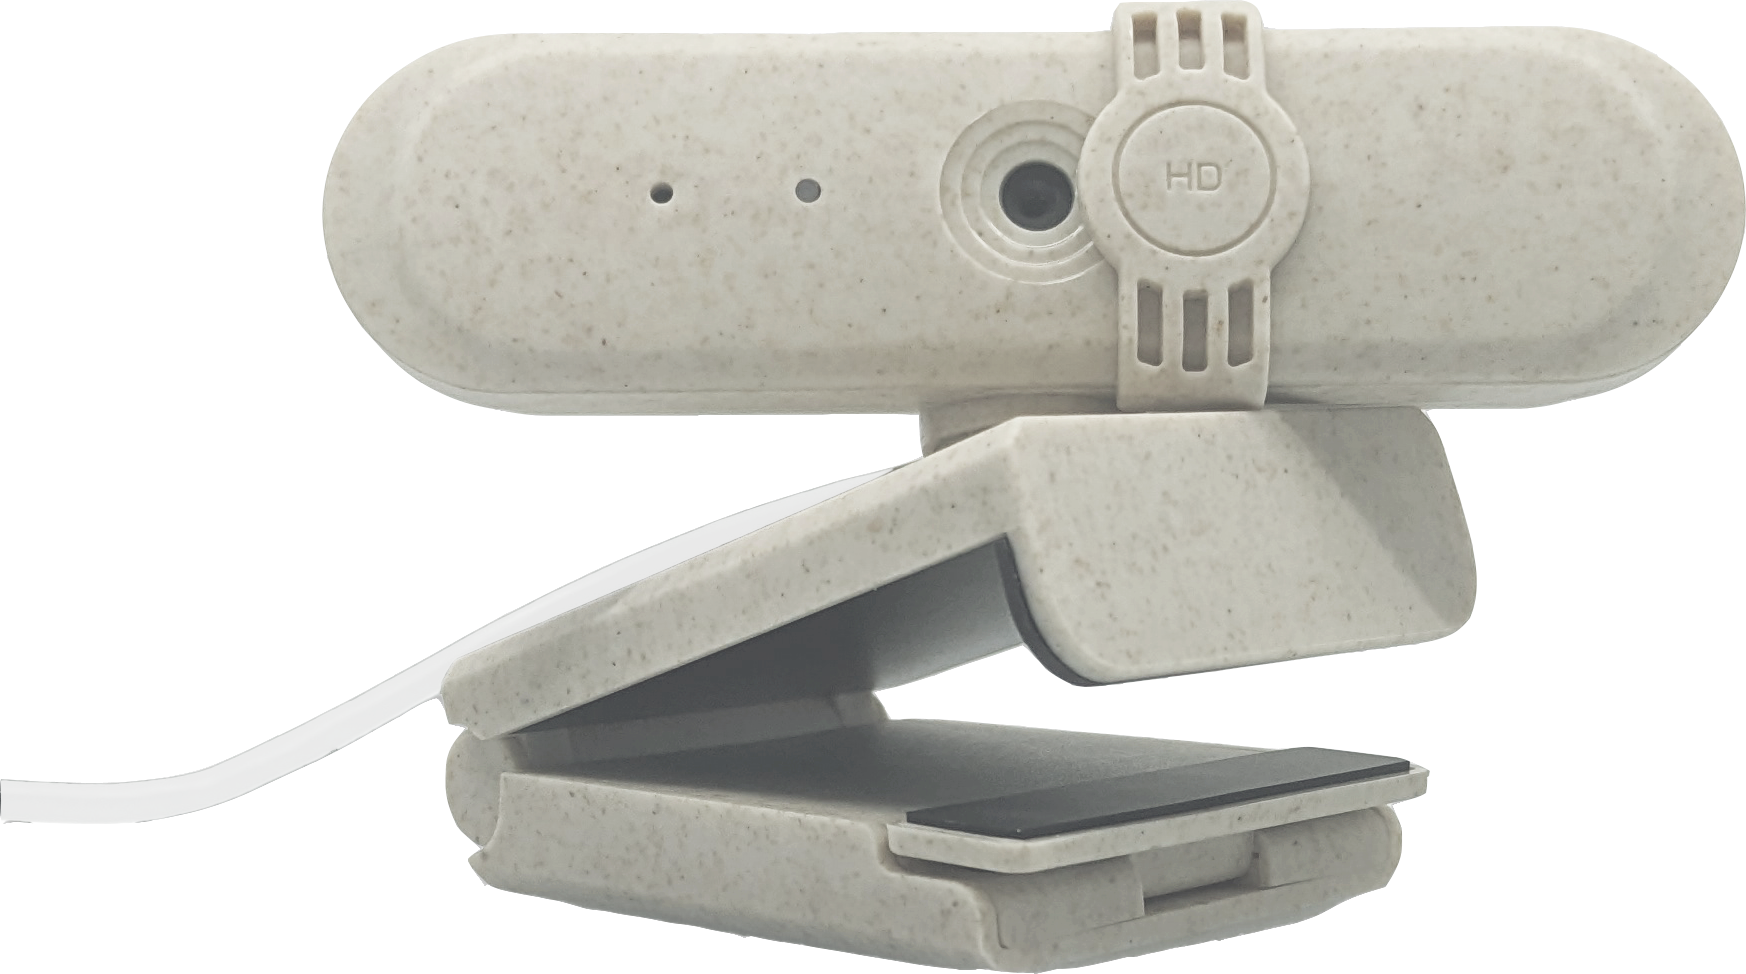 Accuratus Bioplastic CAM900 Webcam - Bioplastic Full HD USB Webcam with White Biodegradable Case